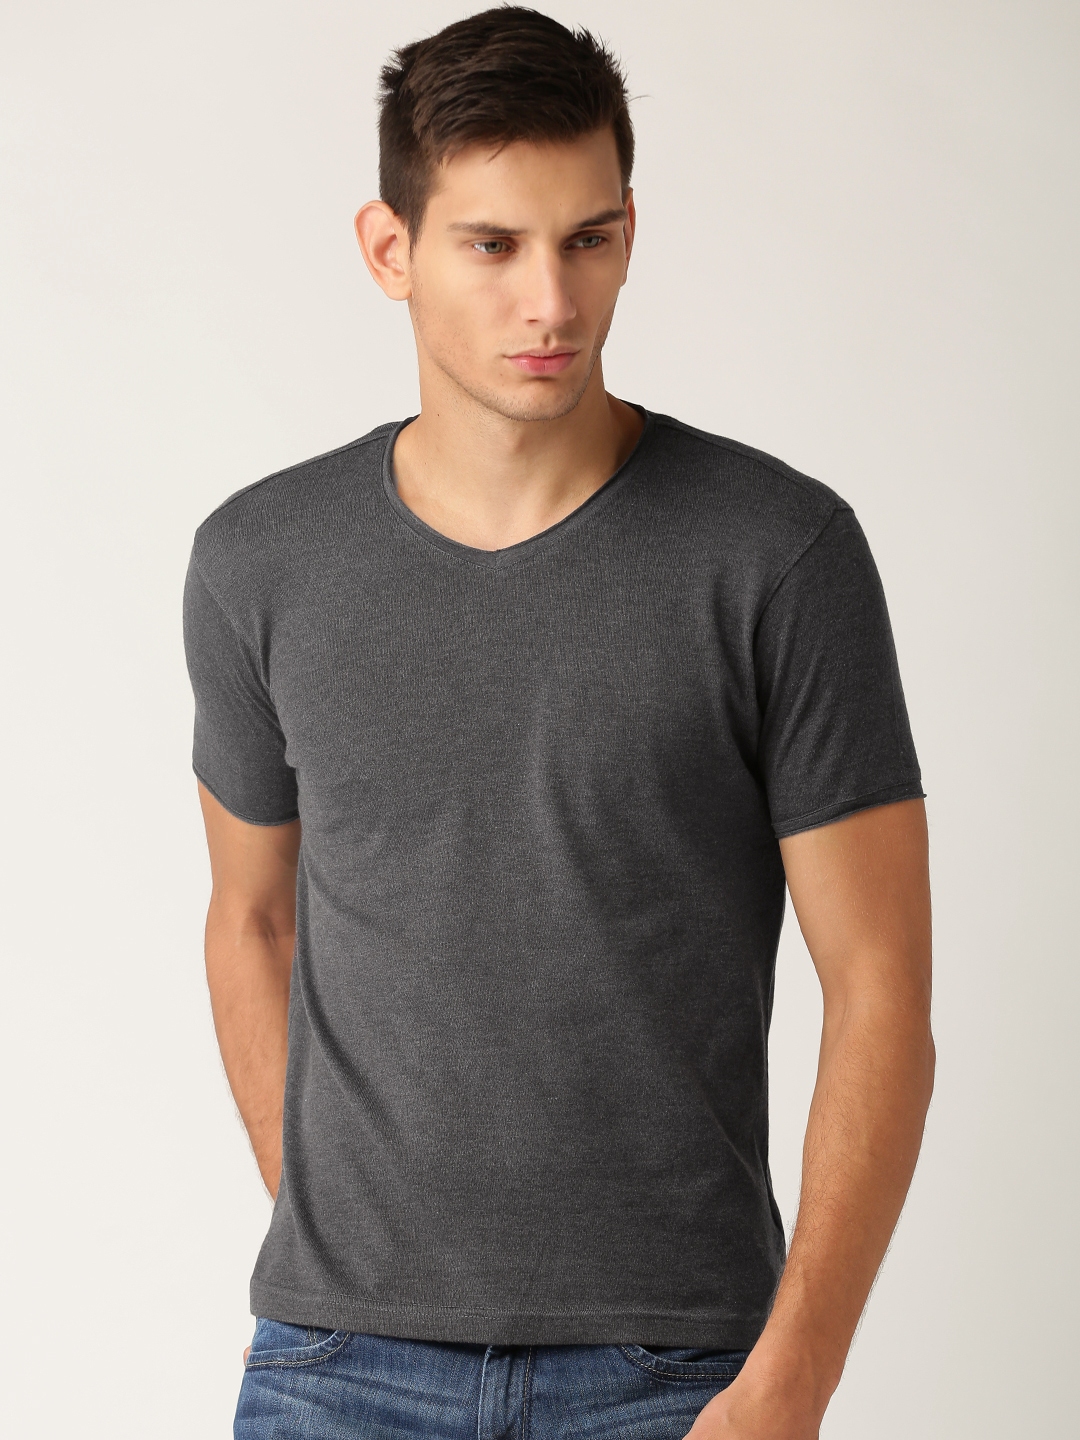 Buy ETHER Charcoal Grey T Shirt - Tshirts for Men 1189881 | Myntra